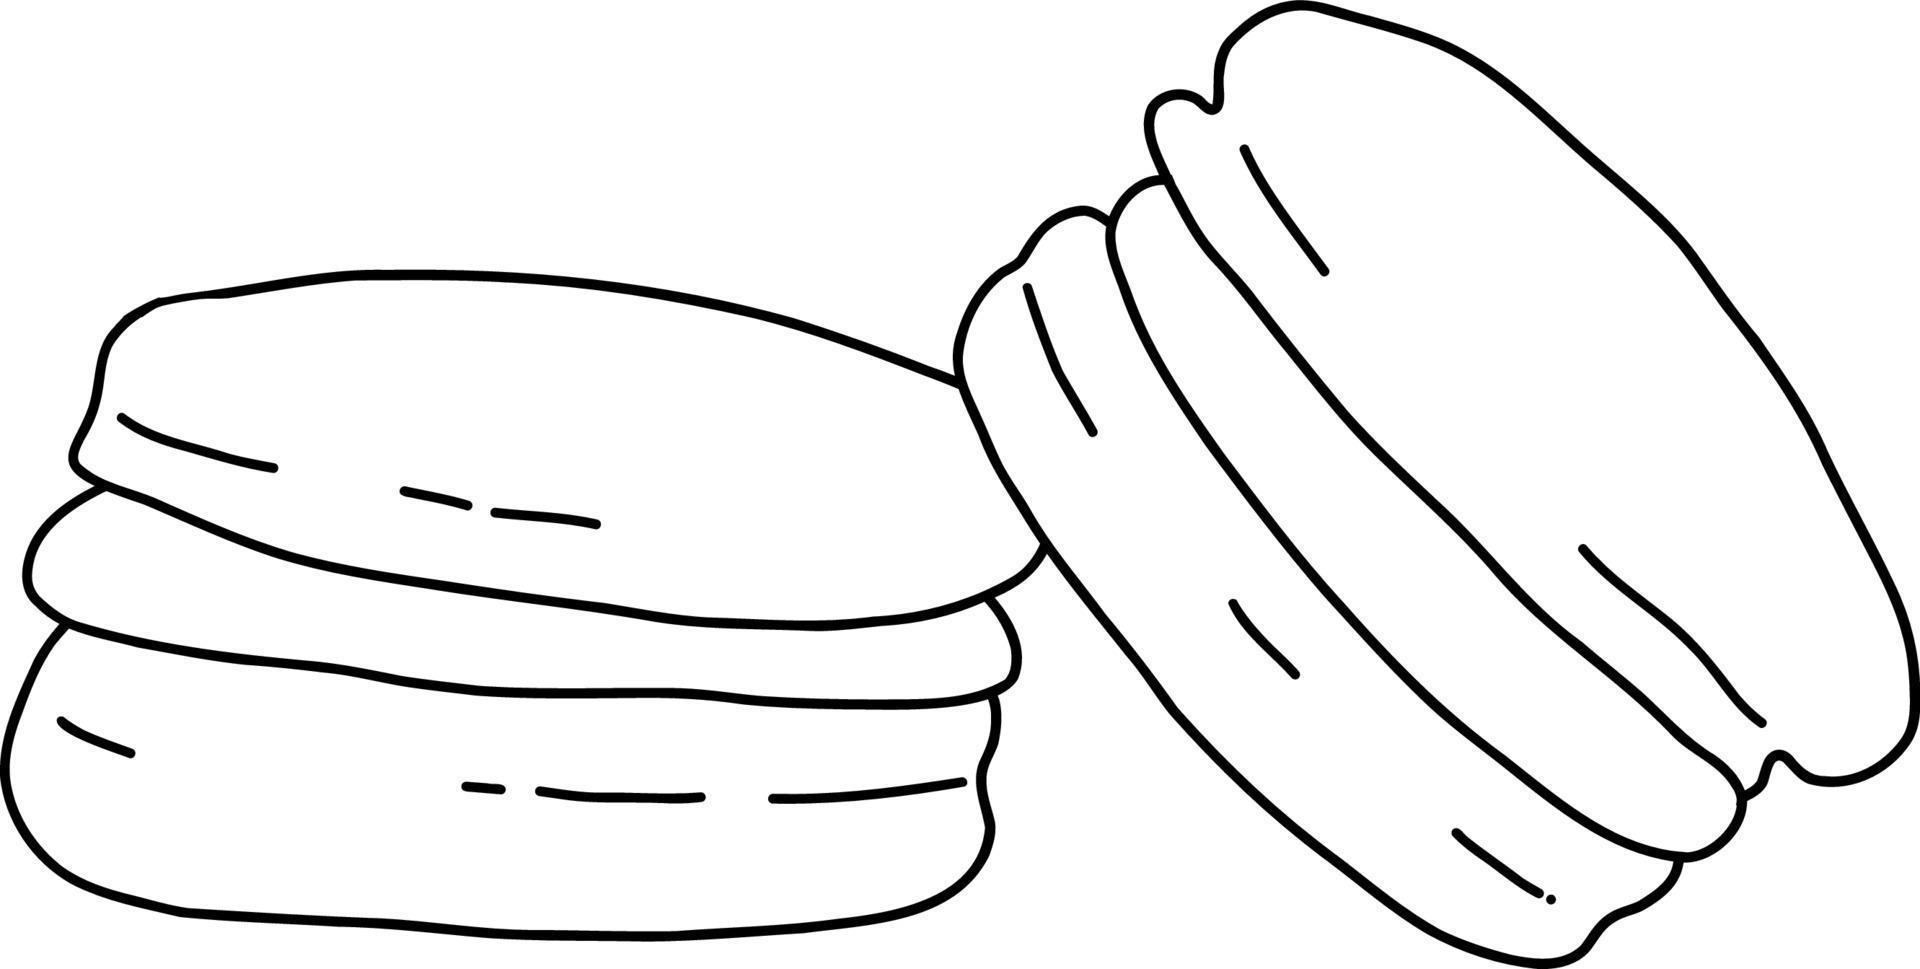 Cookies Macarons. vector illustration